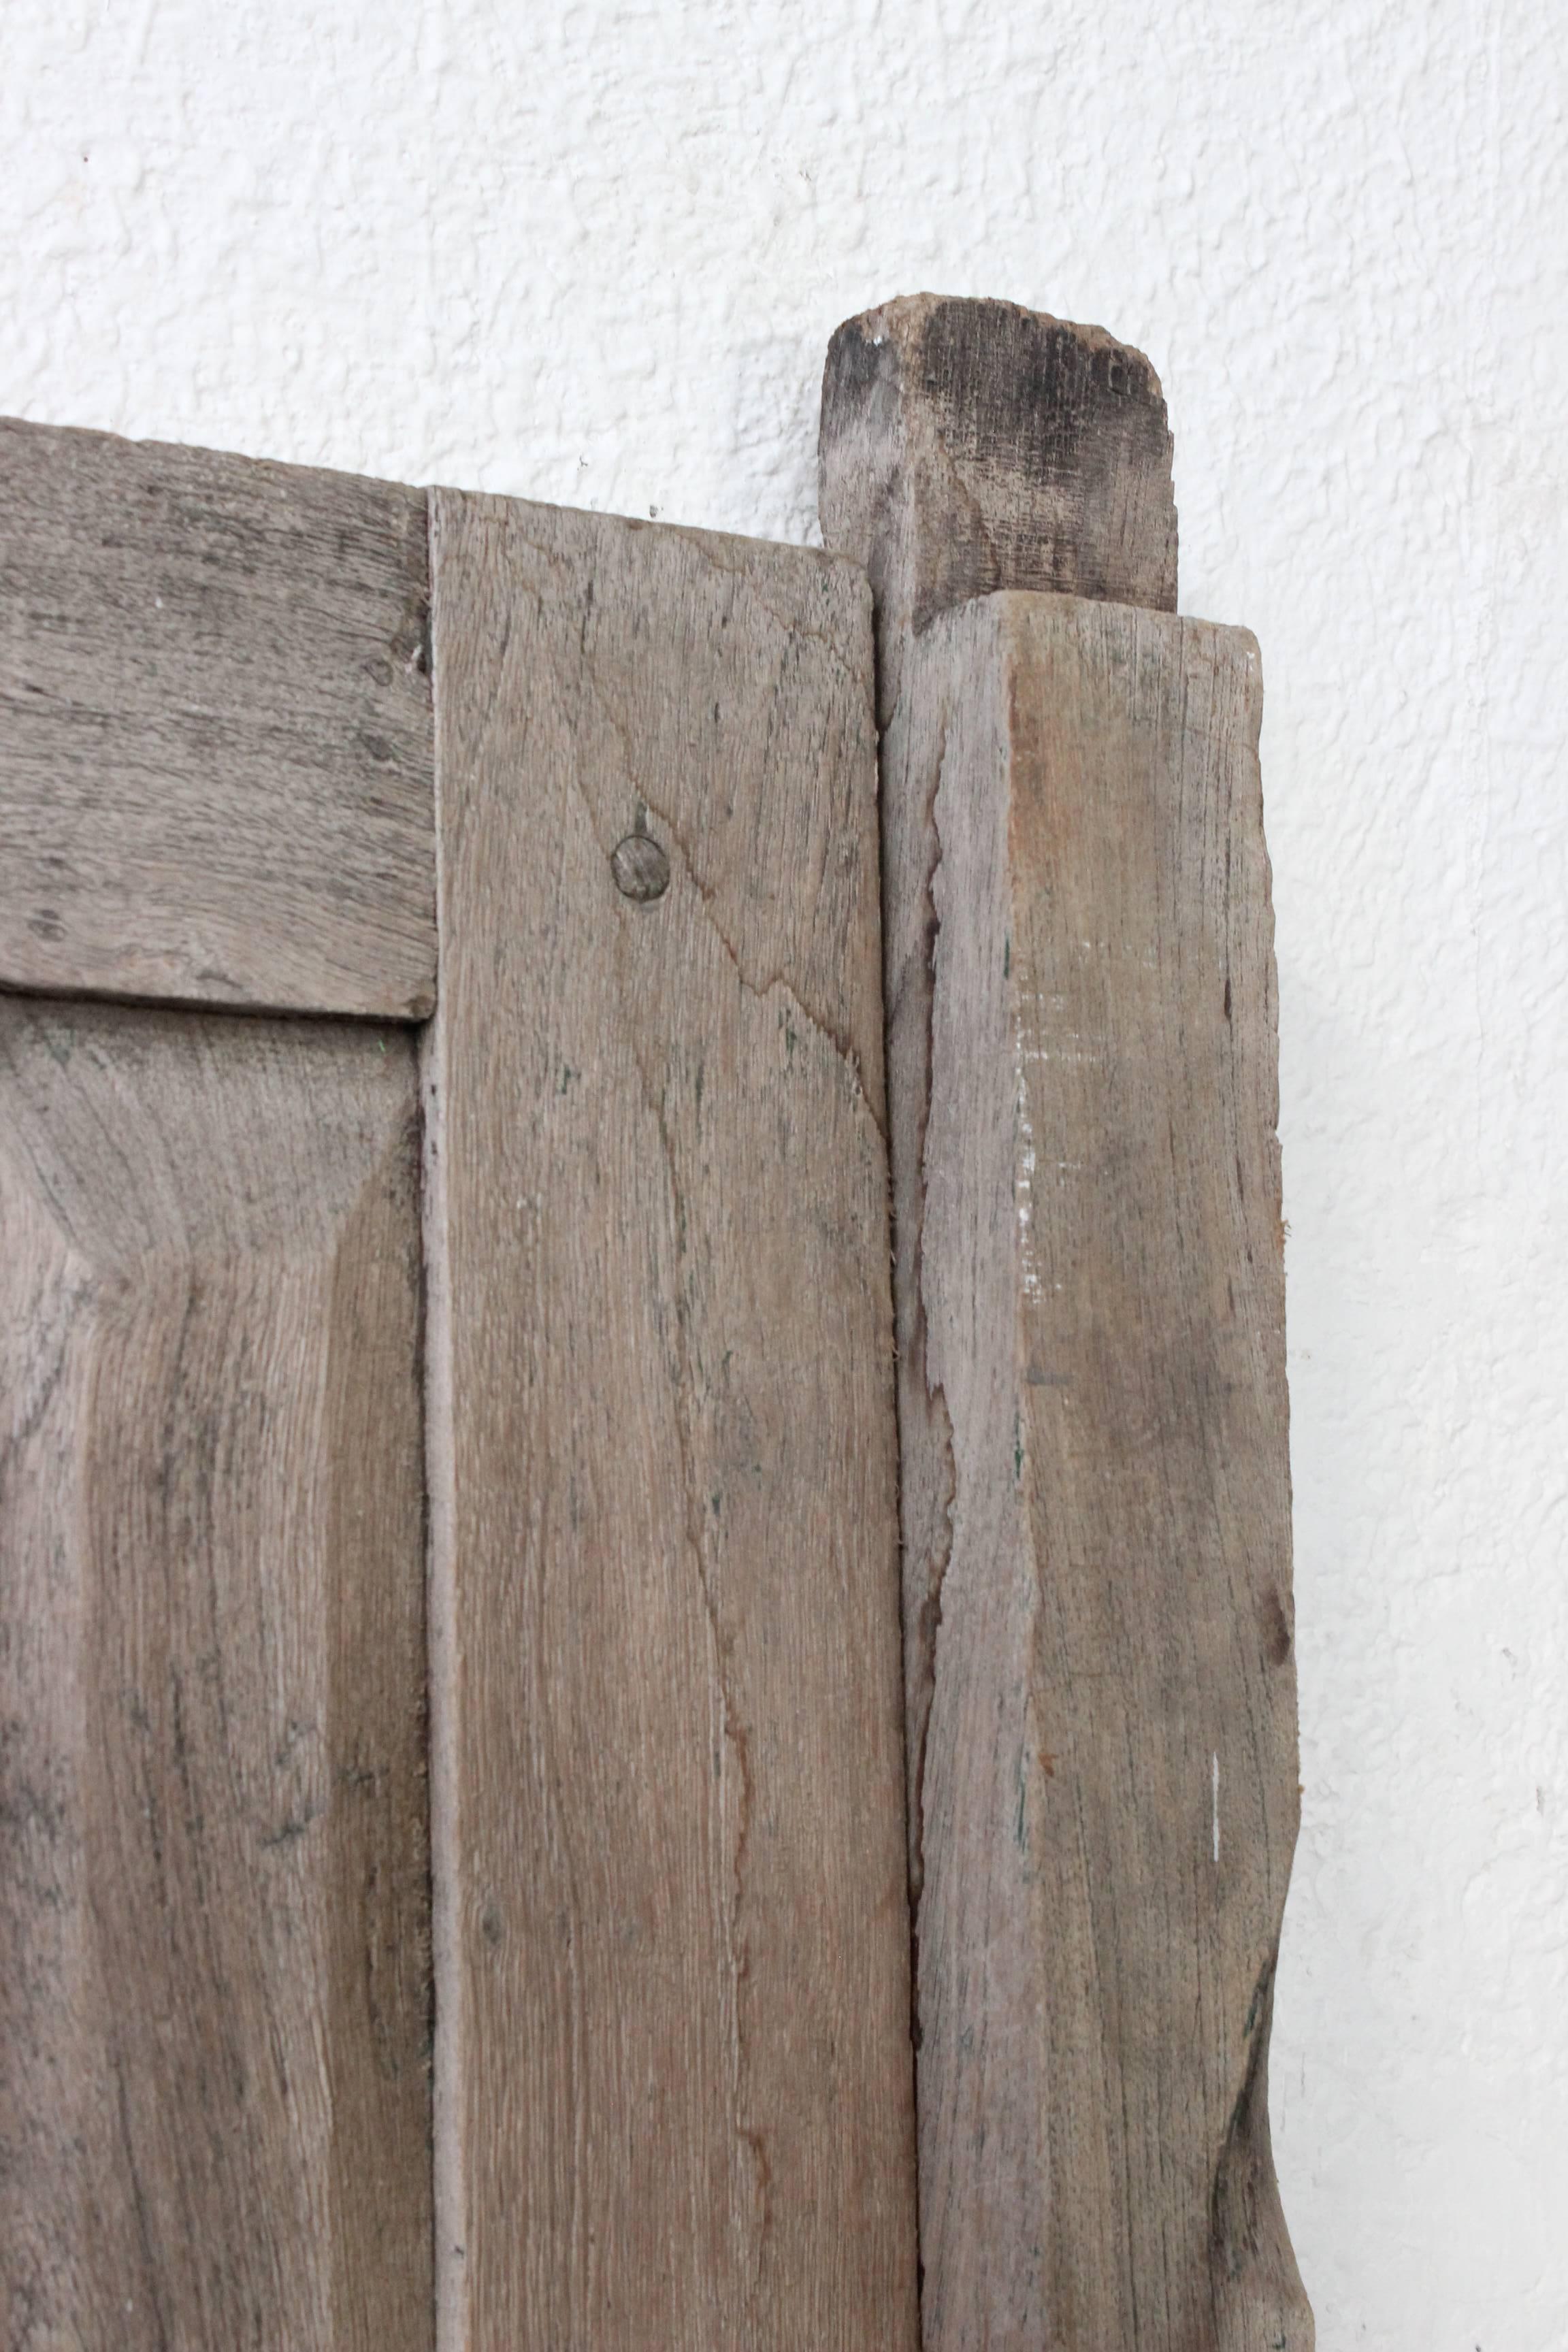 Early 20th Century Solid Mesquite Wood Door Found in Western México 1